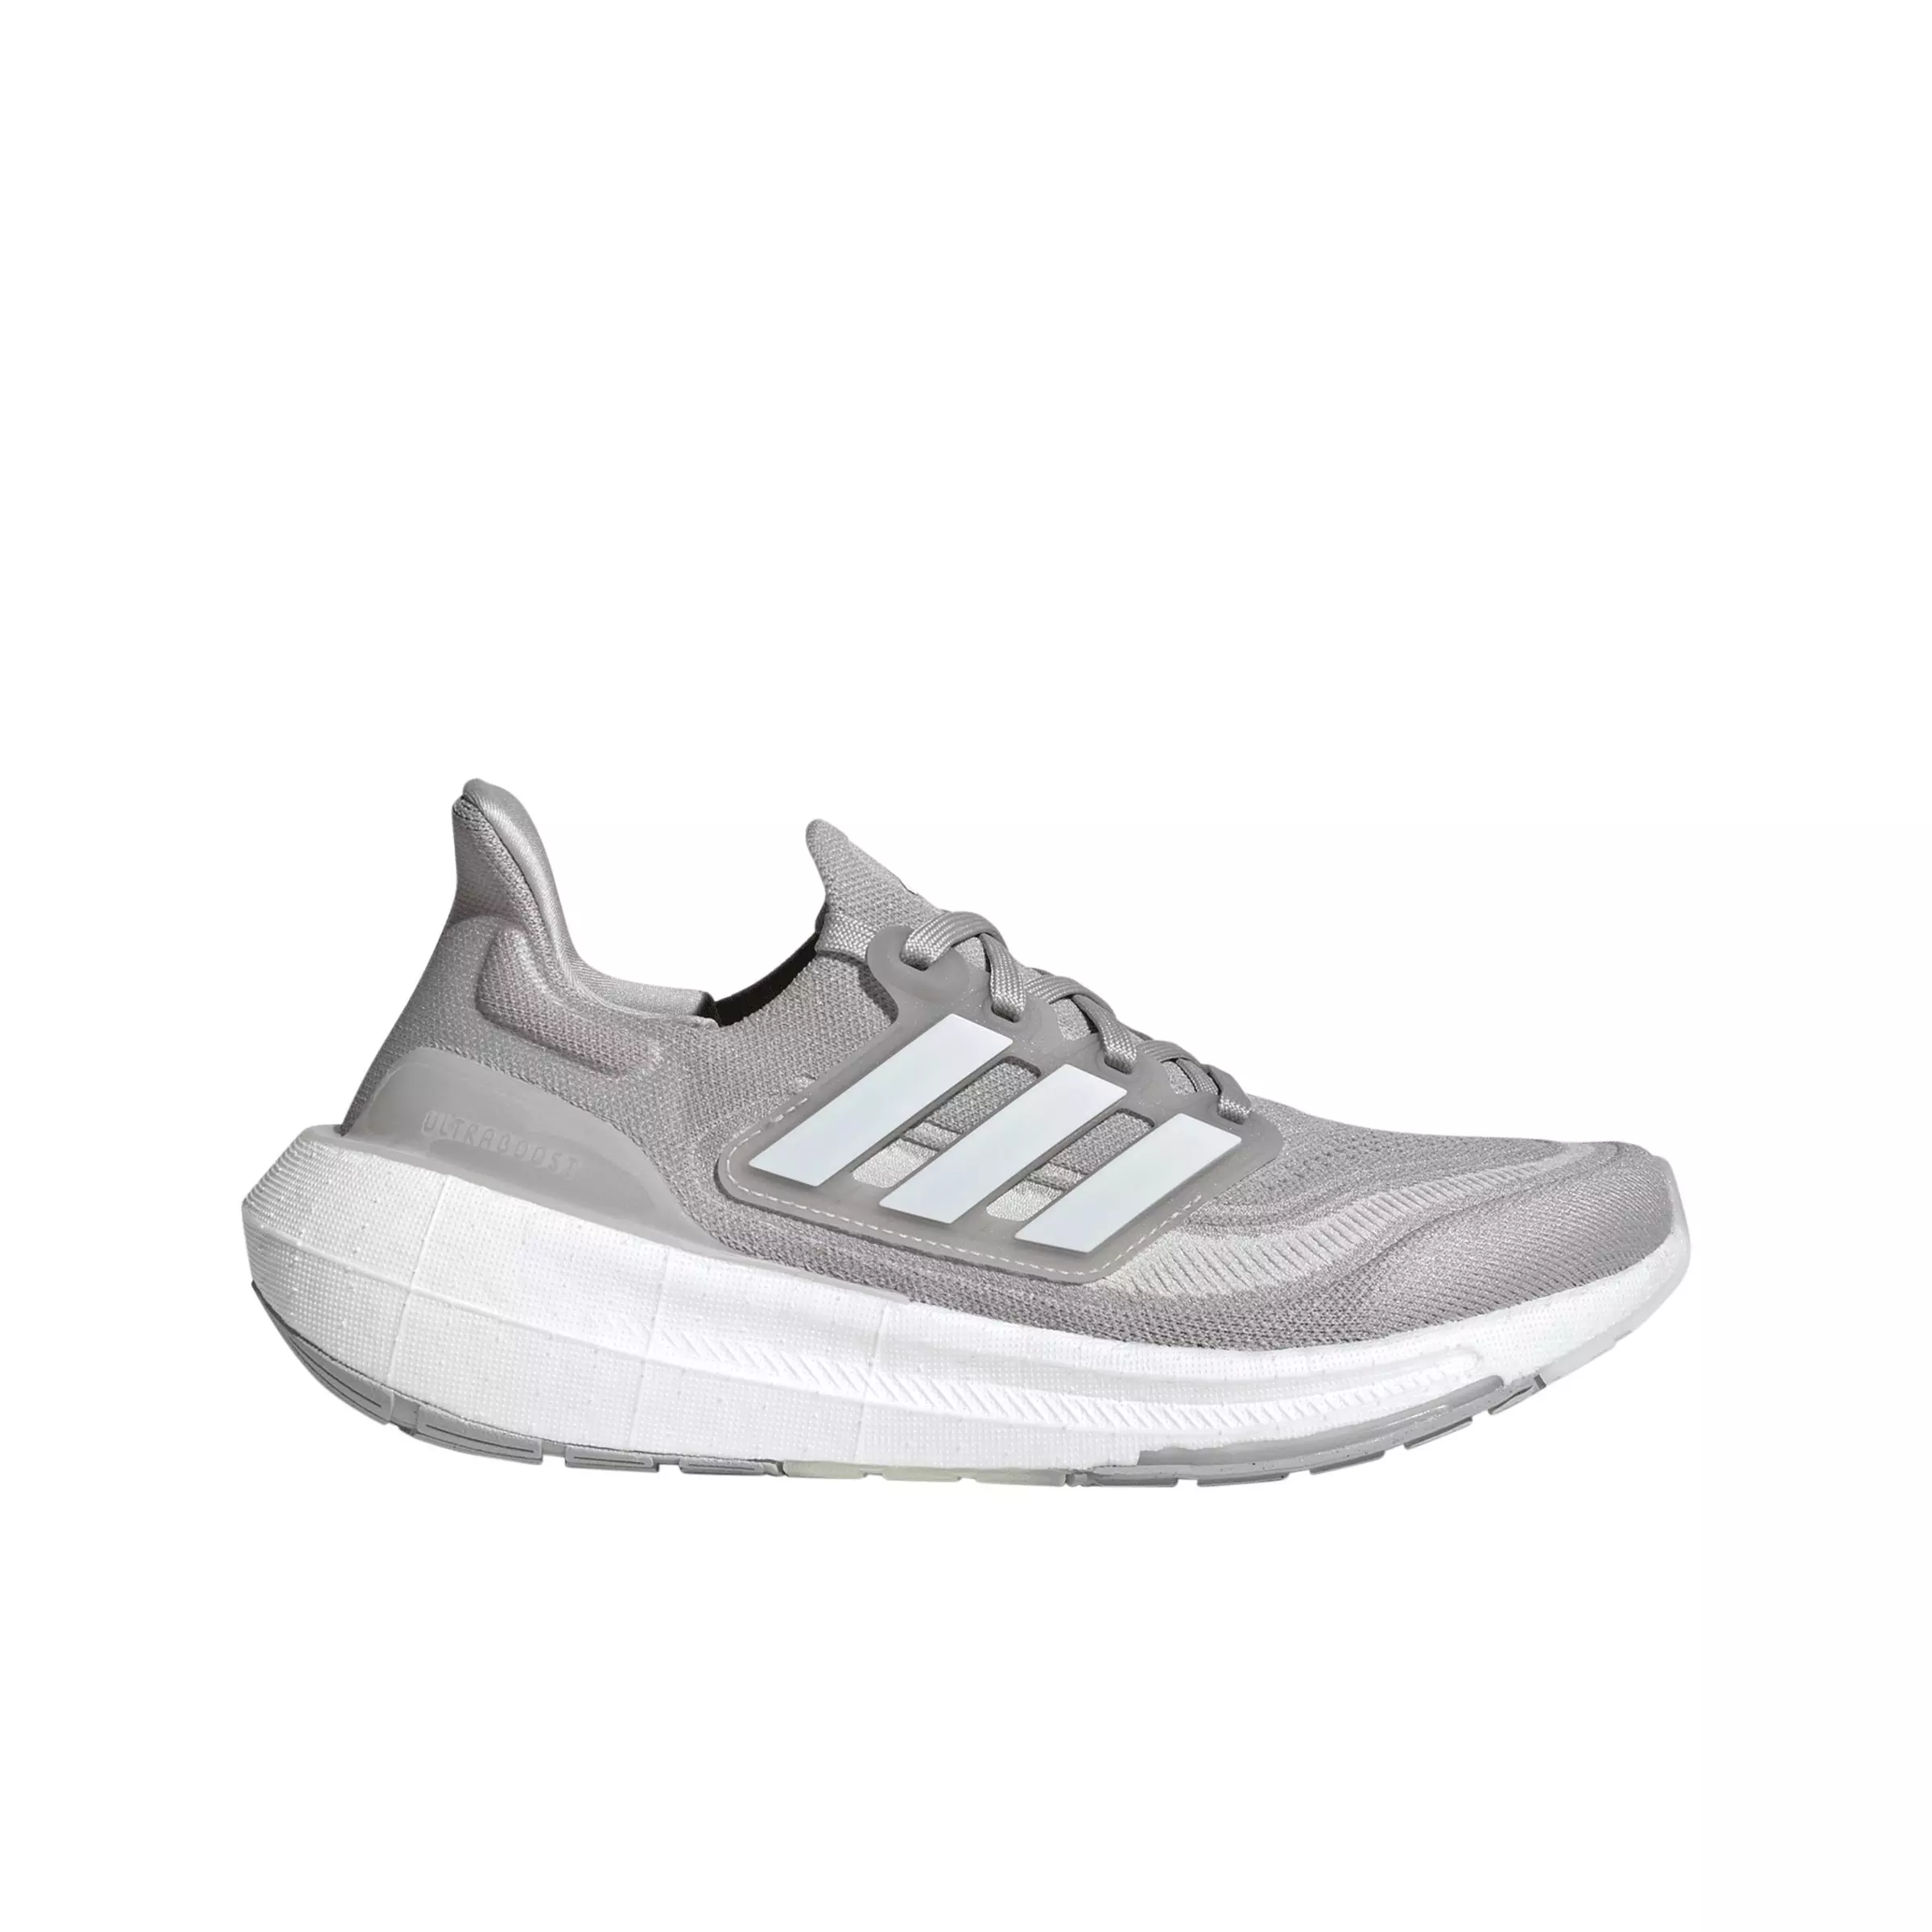 adidas Ultraboost Light "Grey Two/Ftwr White/Grey One" Women's Running Shoe - GREY/WHITE/GREY